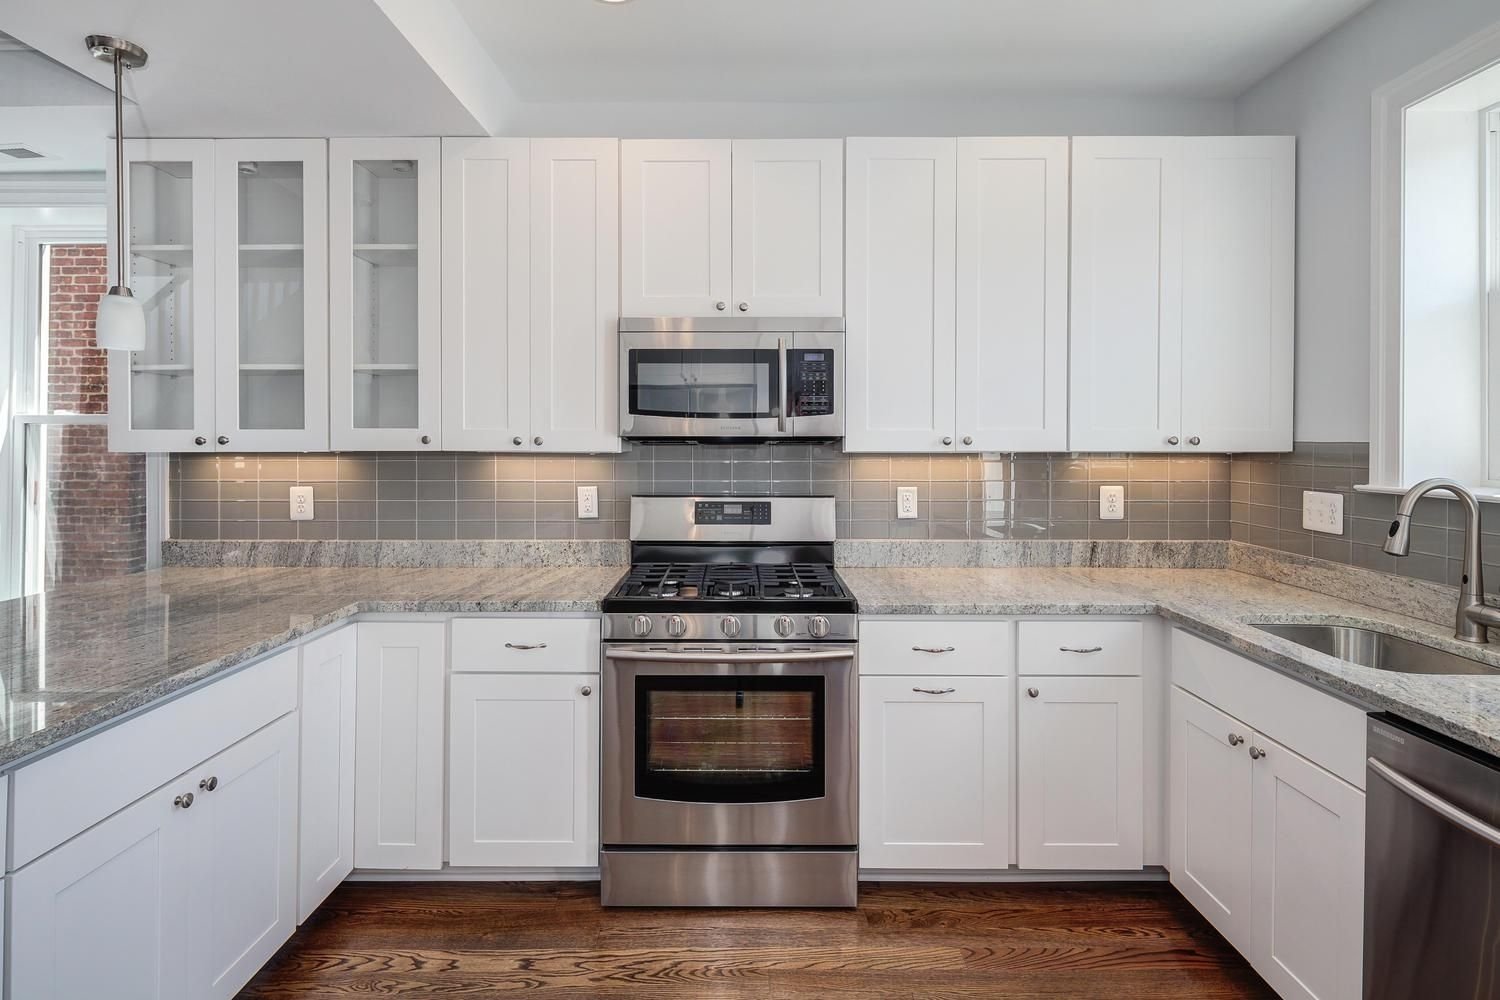 10 Trendy Backsplash Ideas For Kitchen With White Cabinets kitchen kitchen backsplash ideas black granite countertops white 1 2023